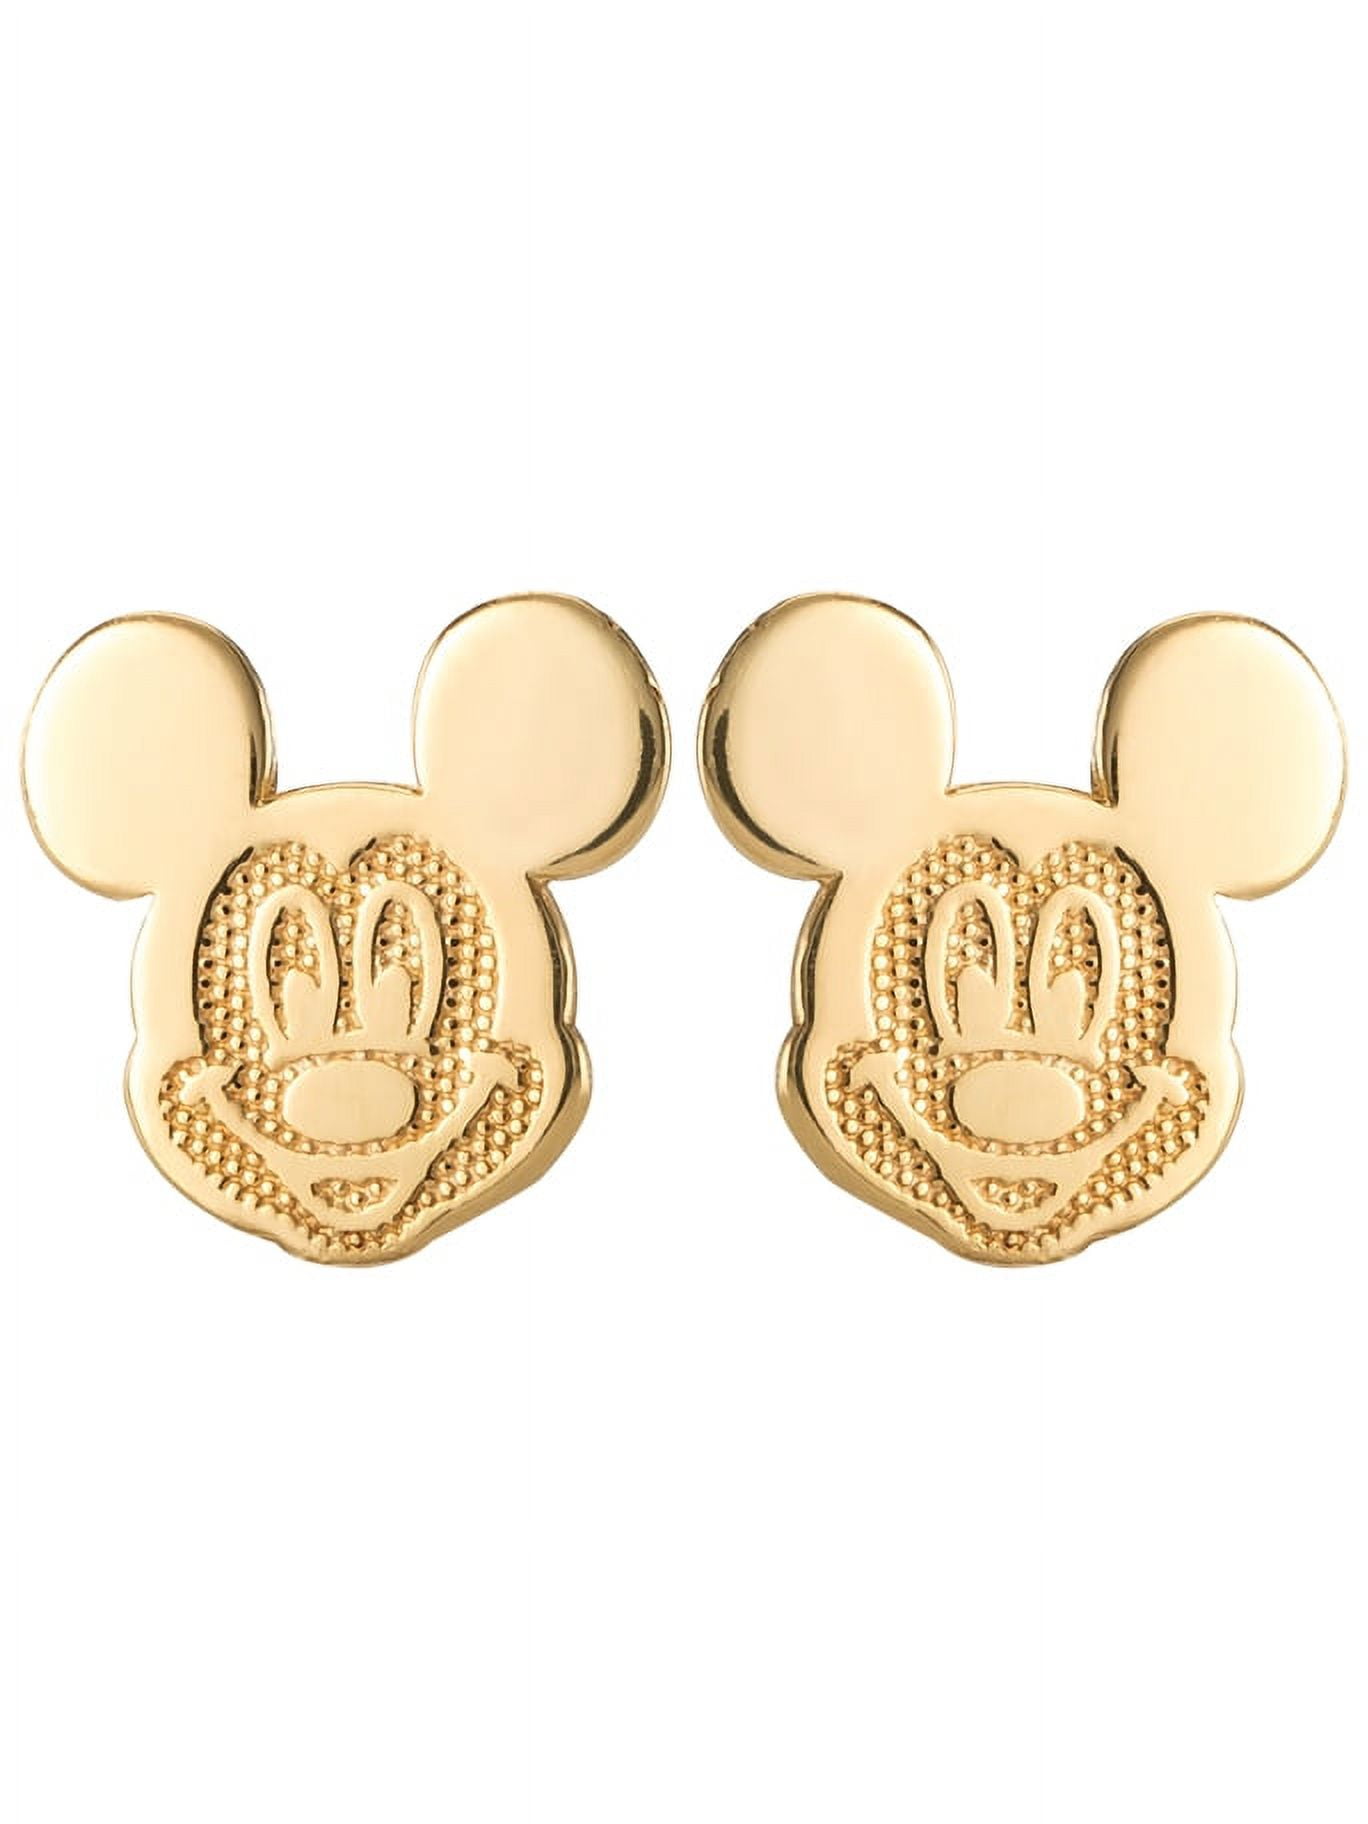 Gold-rimmed Mickey Mouse Drinkware Set - ID: augdisneyana20078